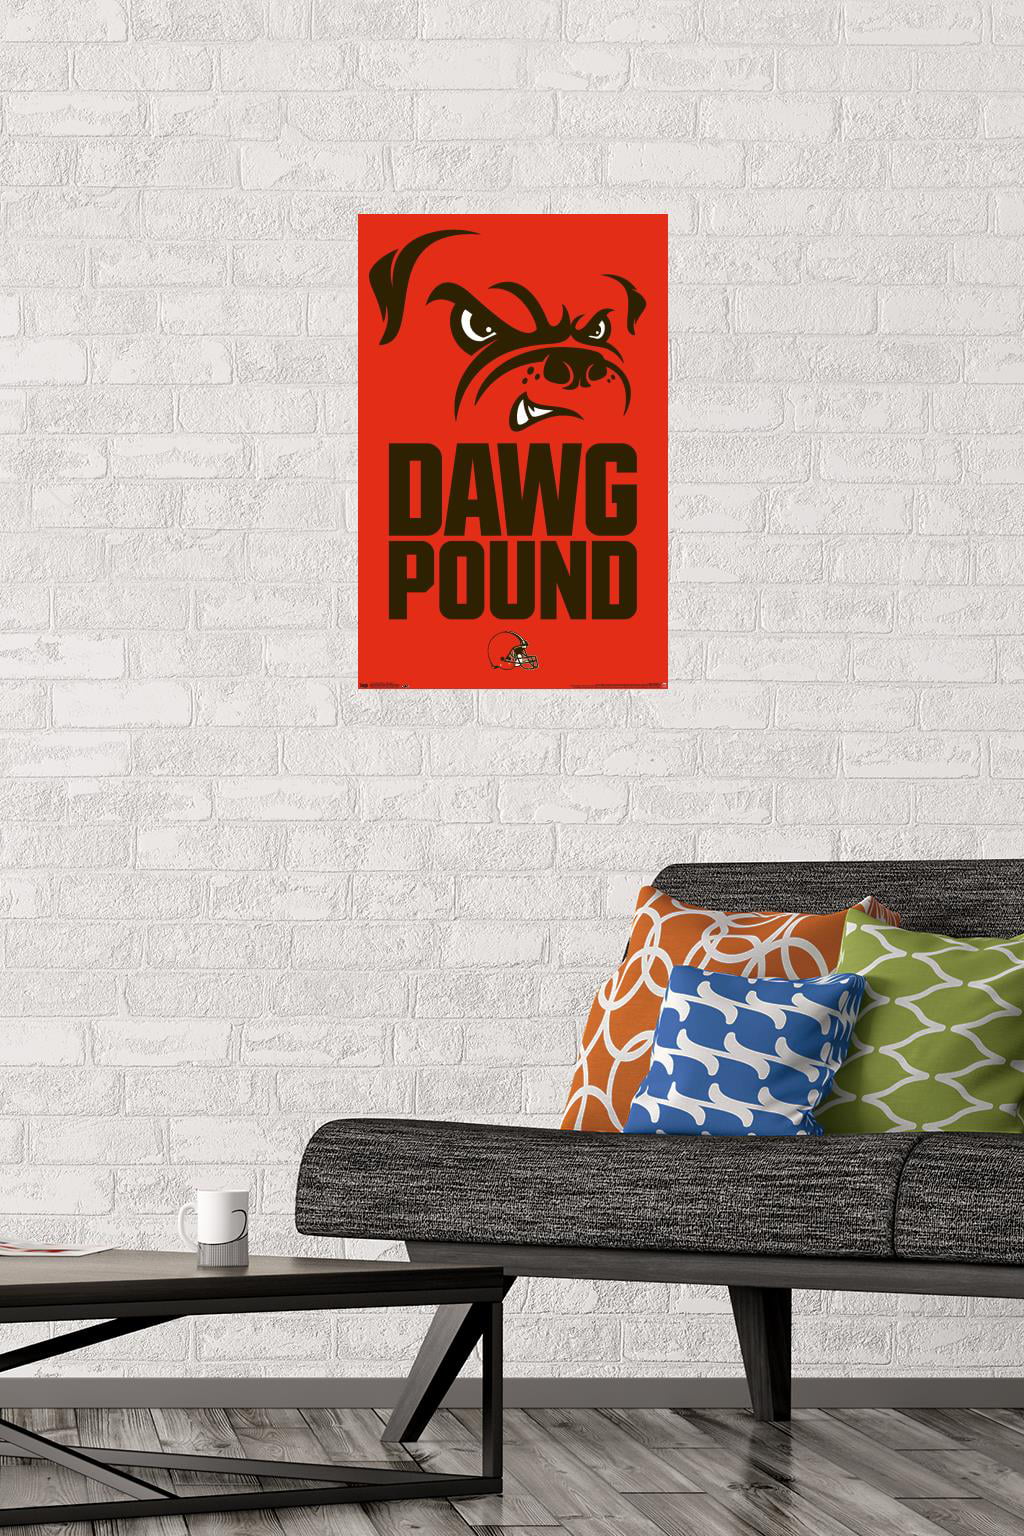  Cleveland Browns Dog Dawg Pound 11 x 8.5 Custom